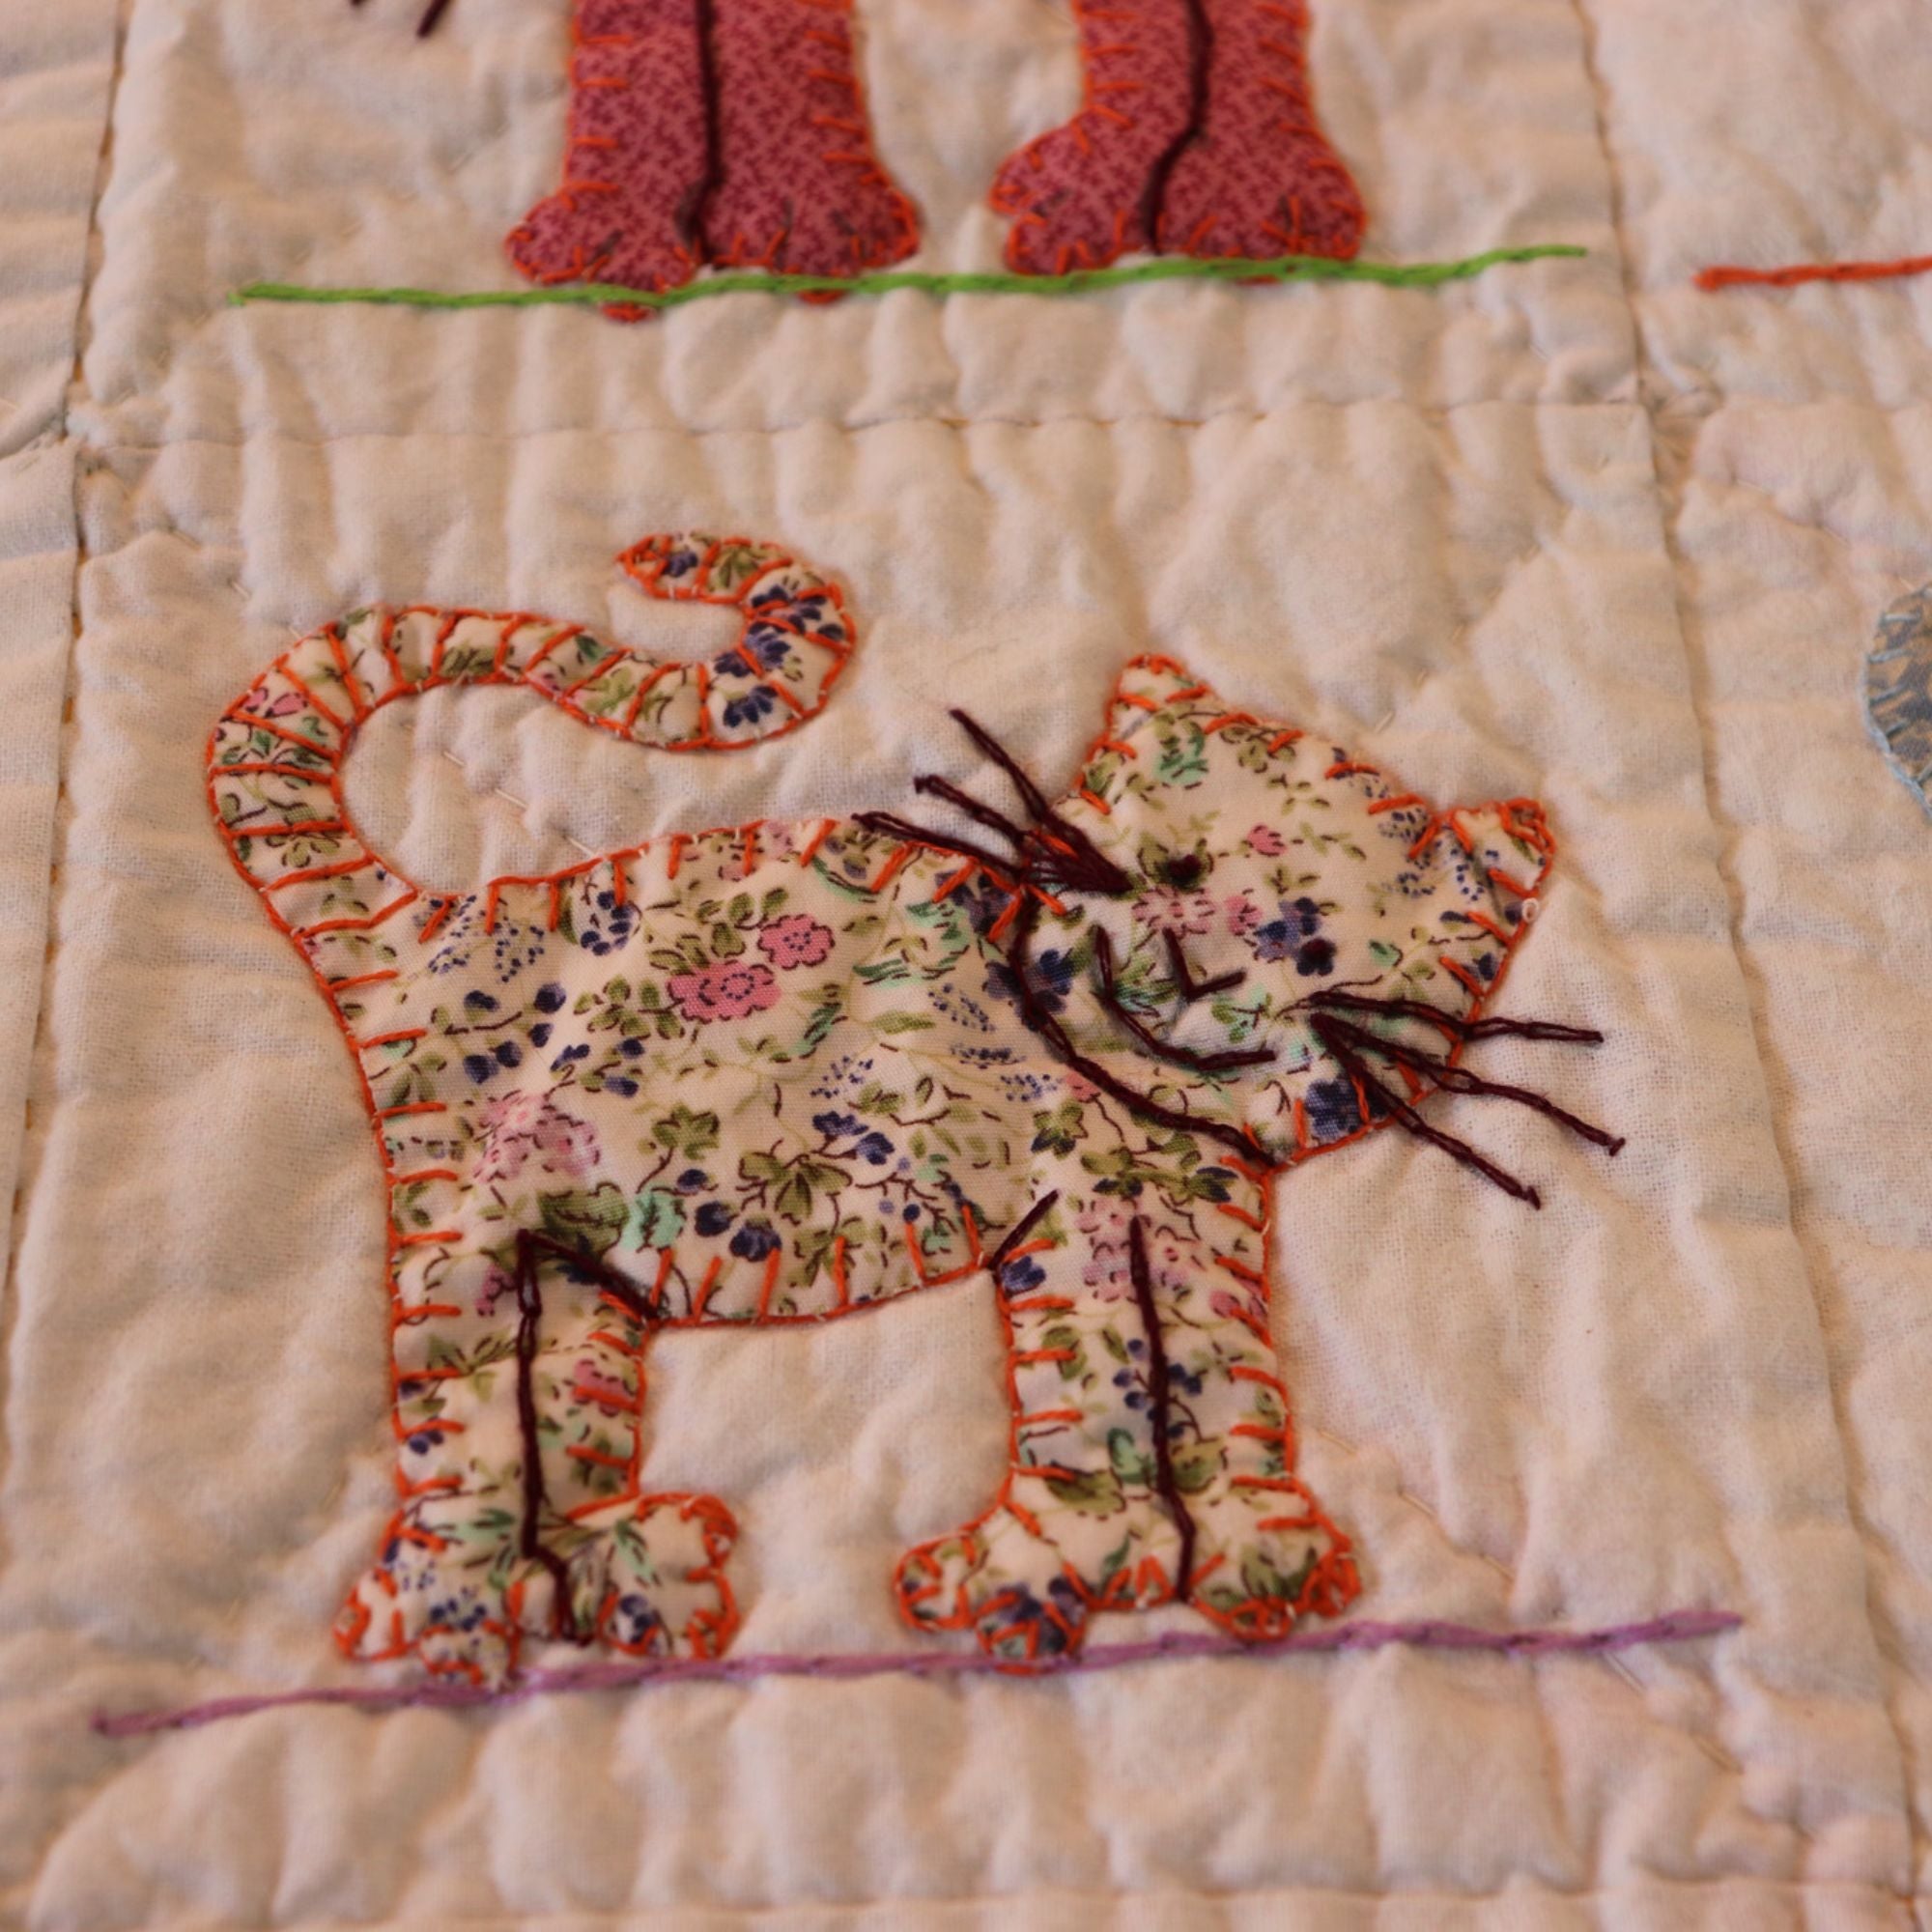 Children's Handmade 'Top Cats' Quilt